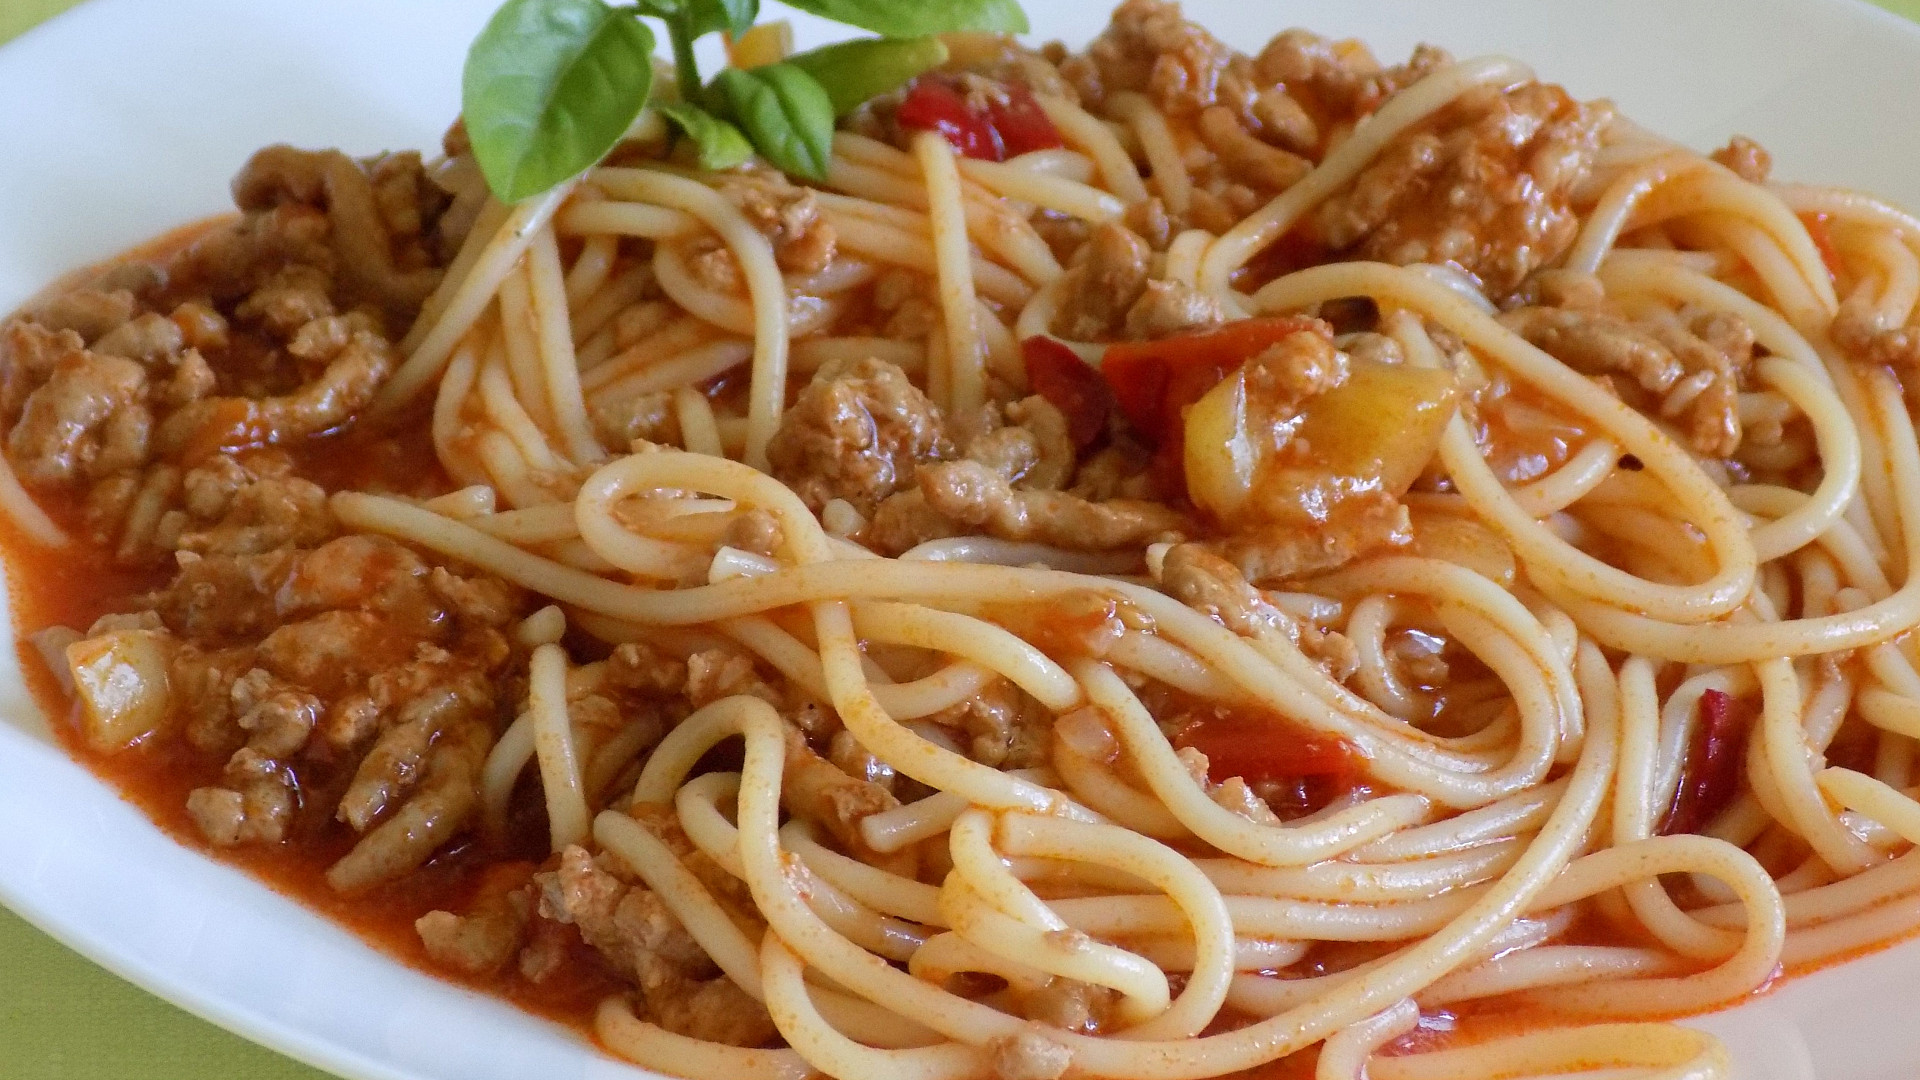 Špagety od maminky